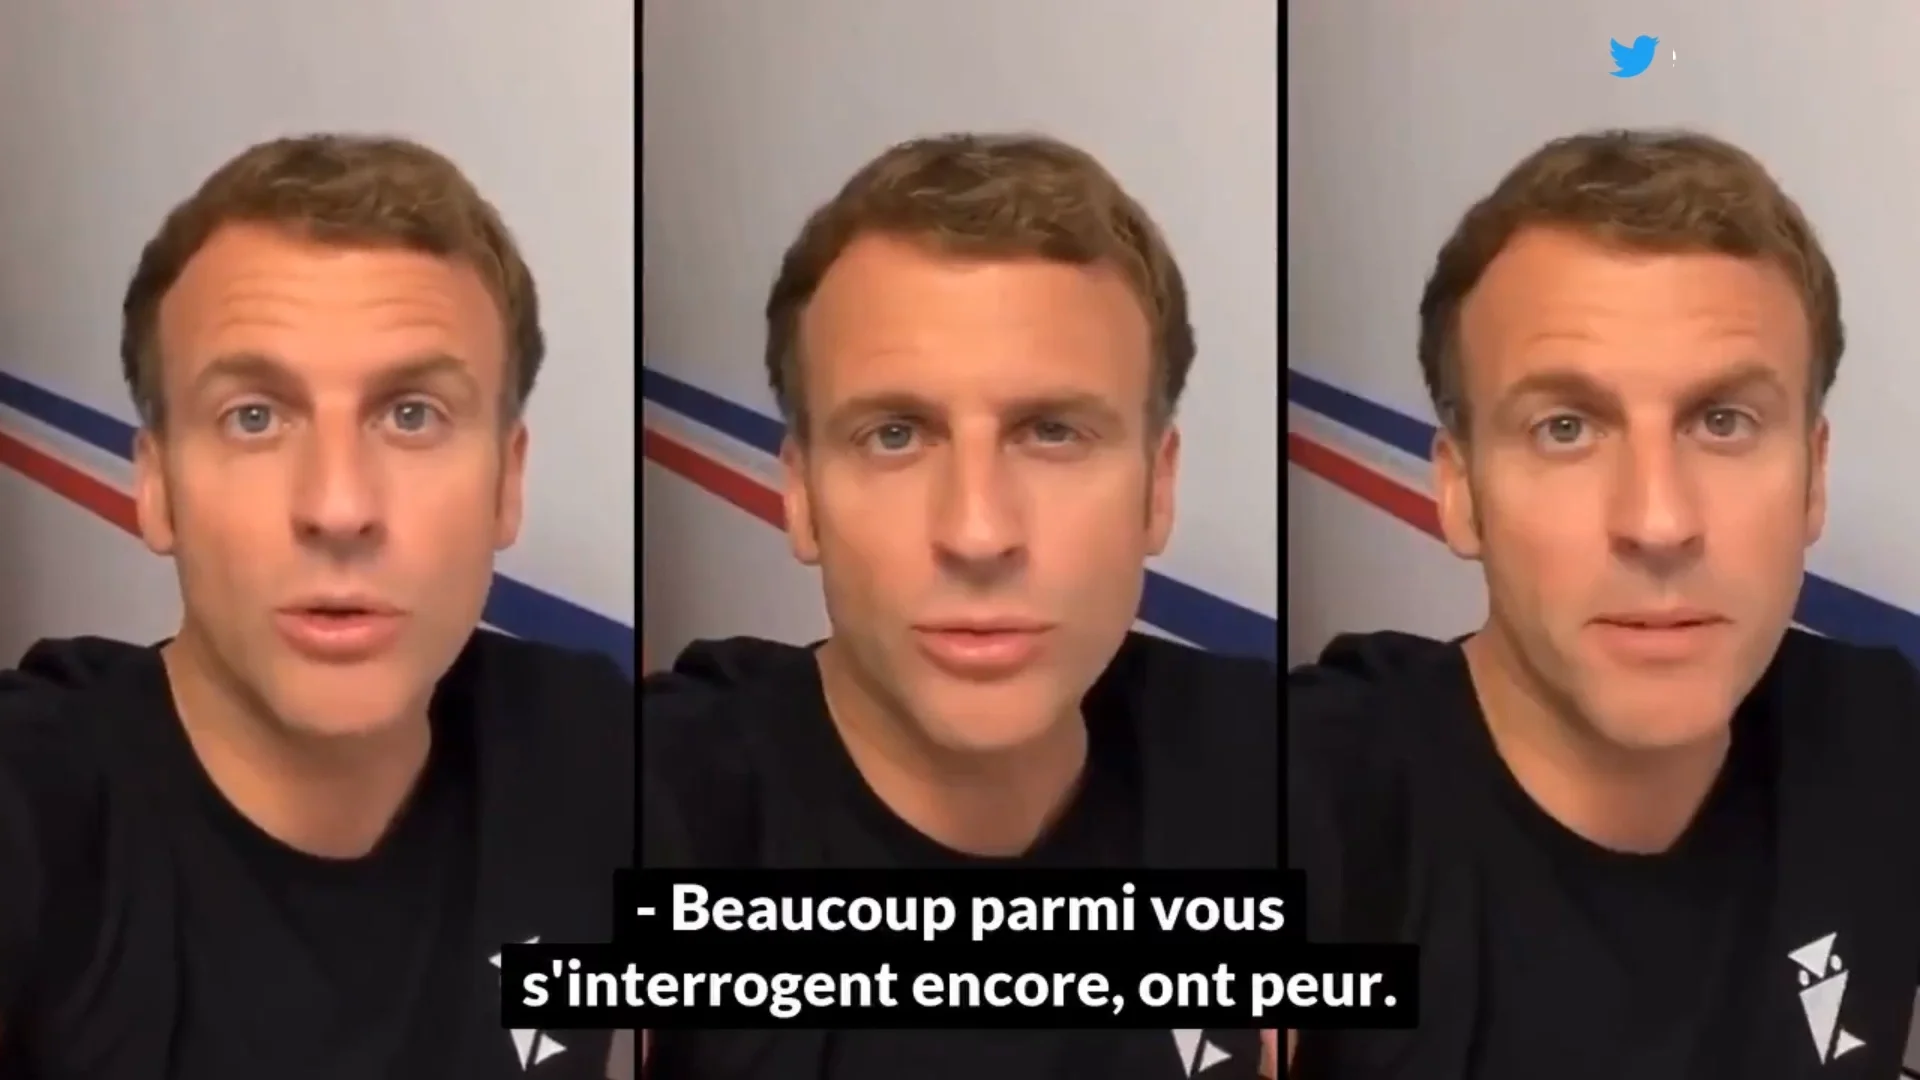 Les fake news de l’influenceur Emmanuel Macron